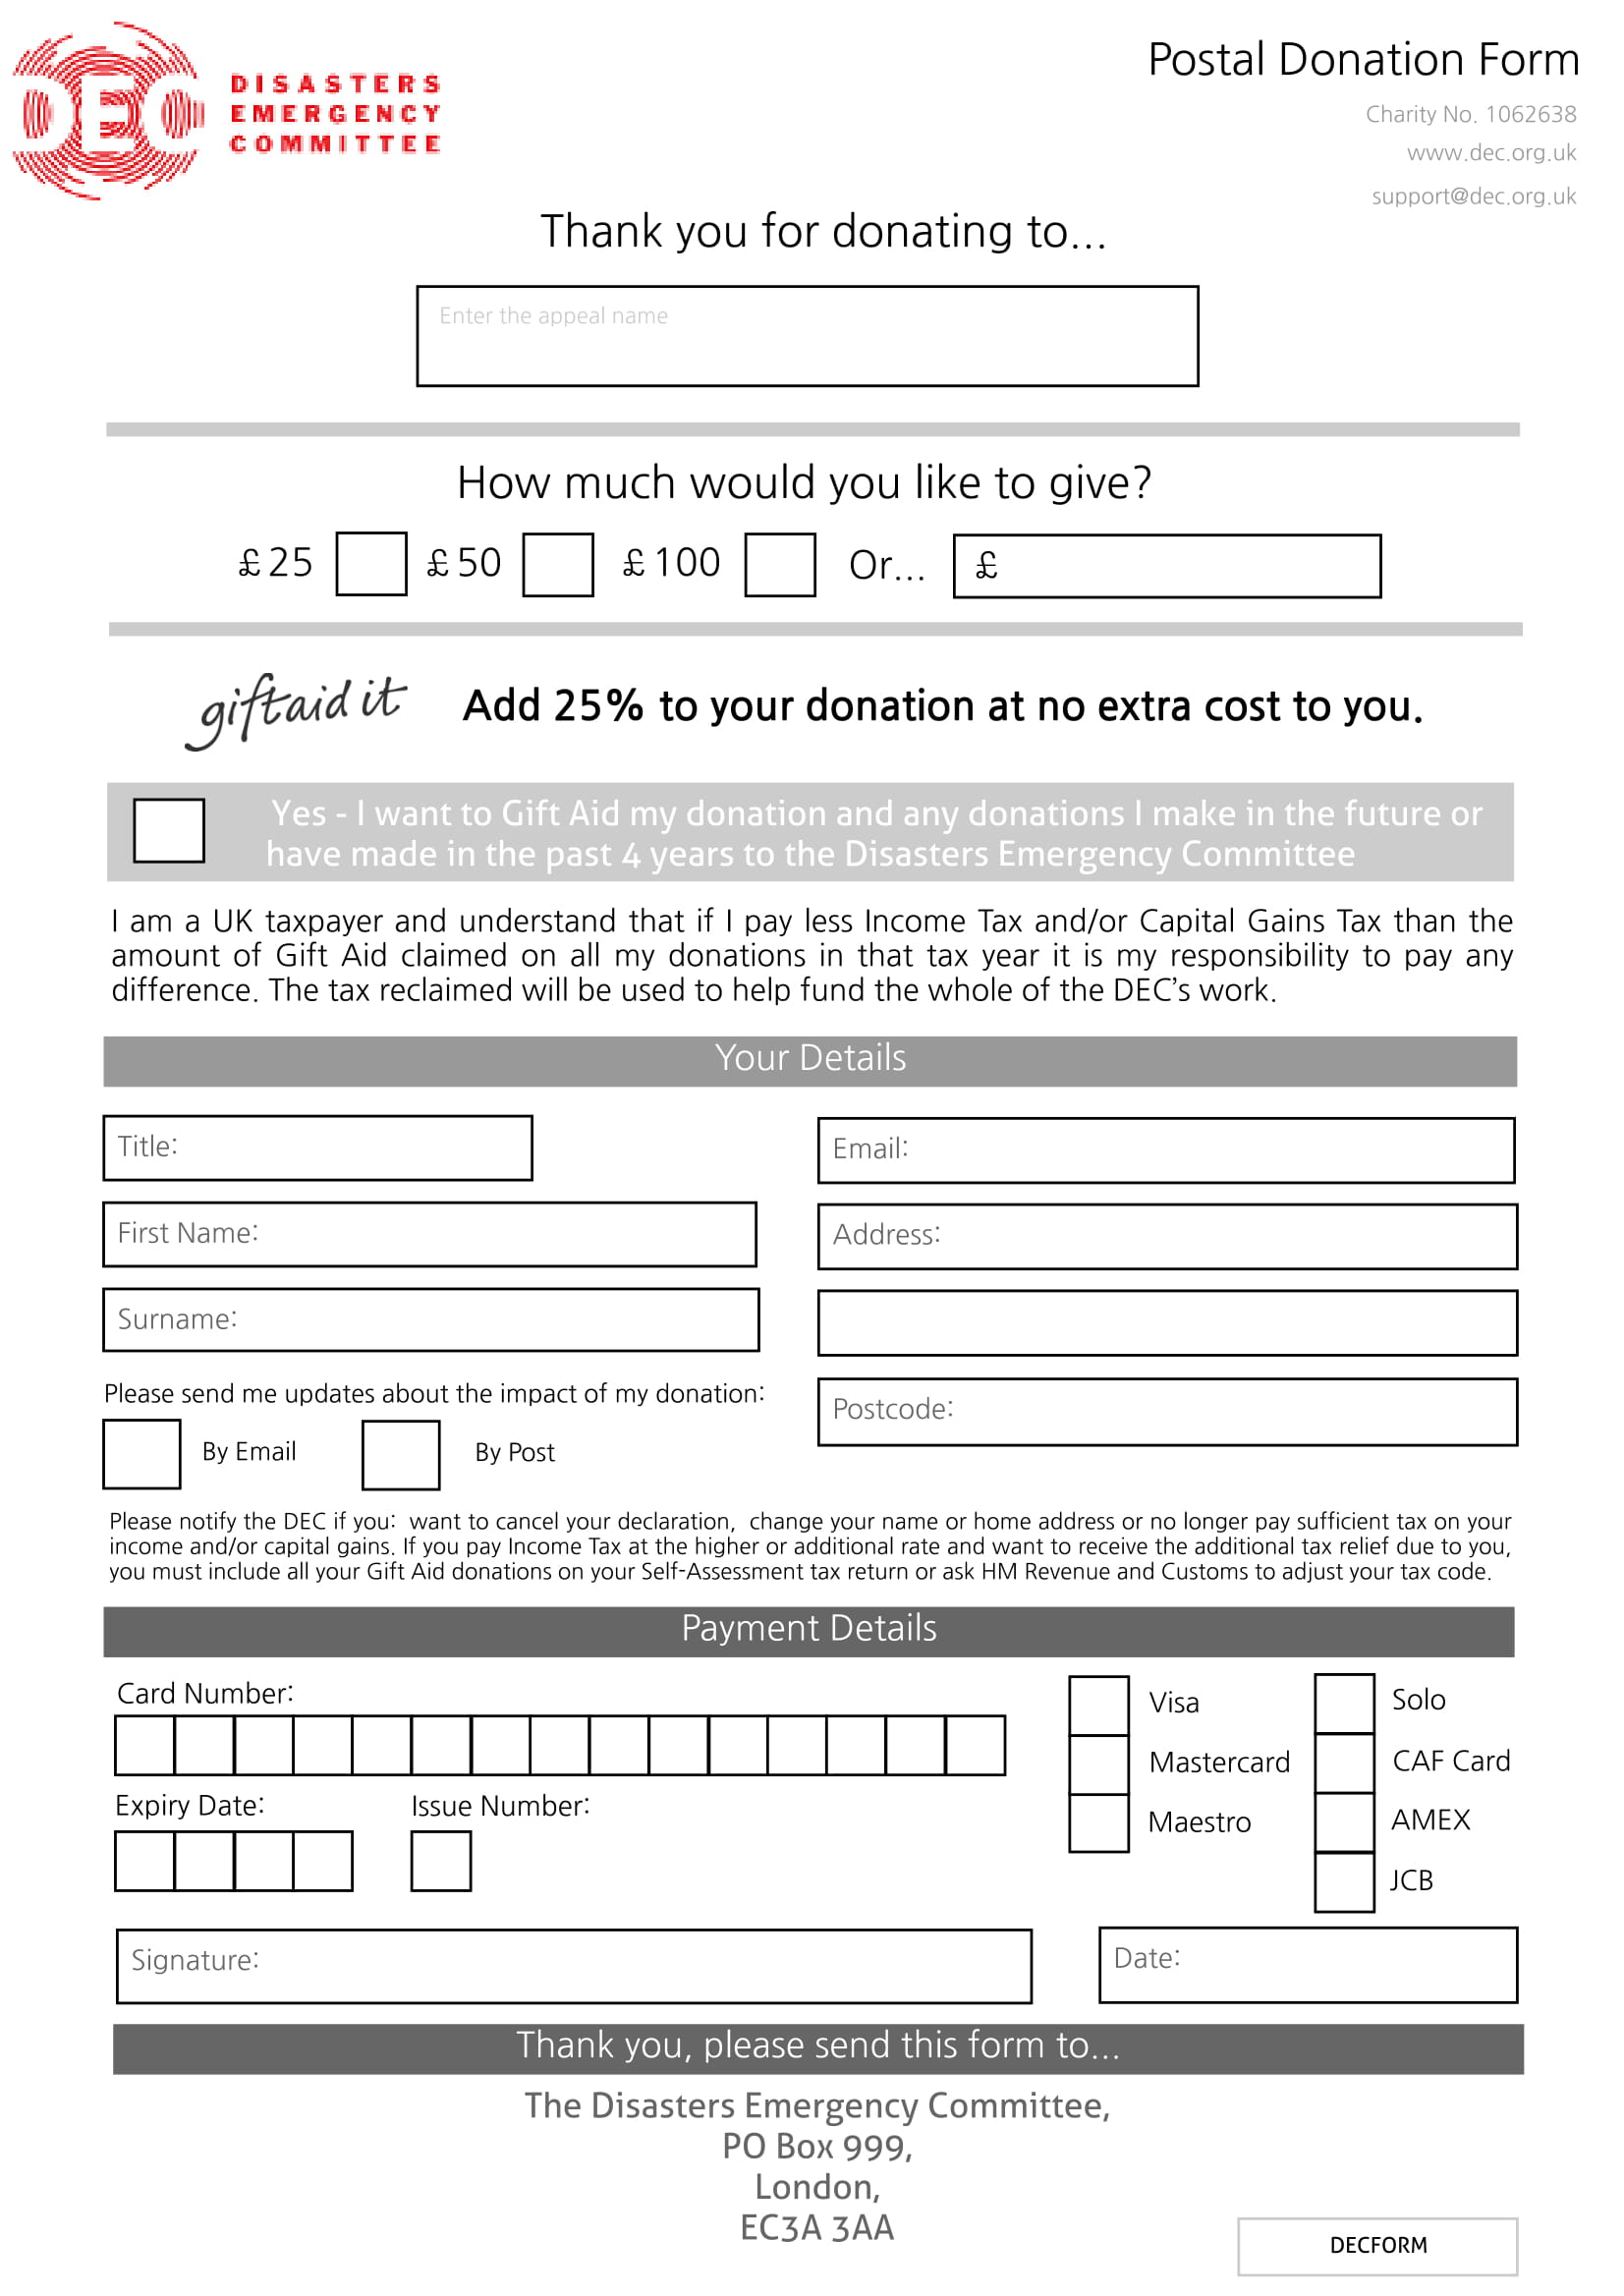 postal donation form 1